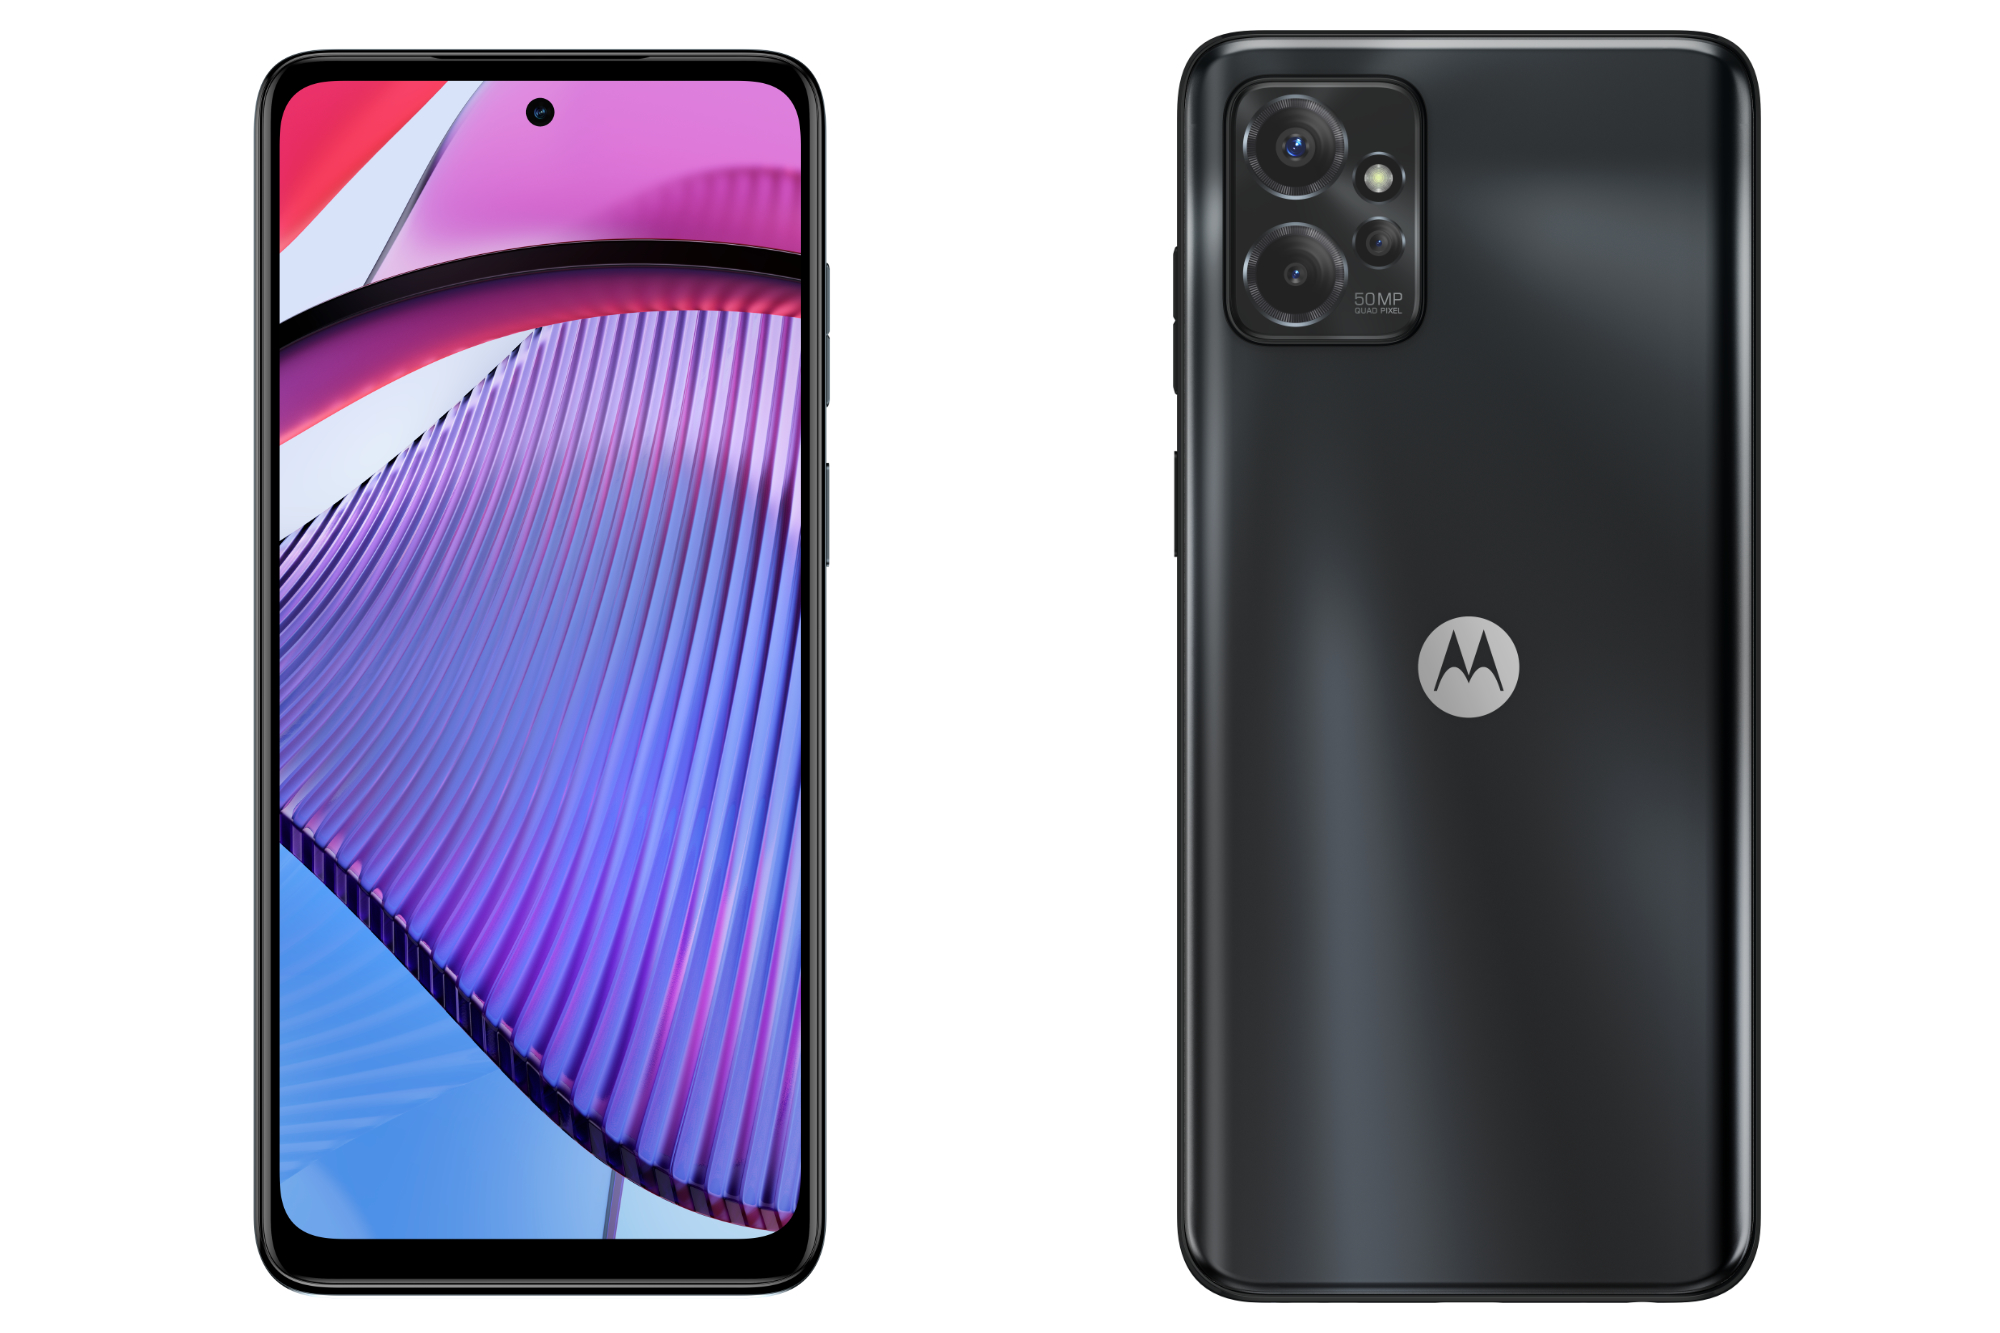 Product renders of the Motorola Moto G Power 5G.